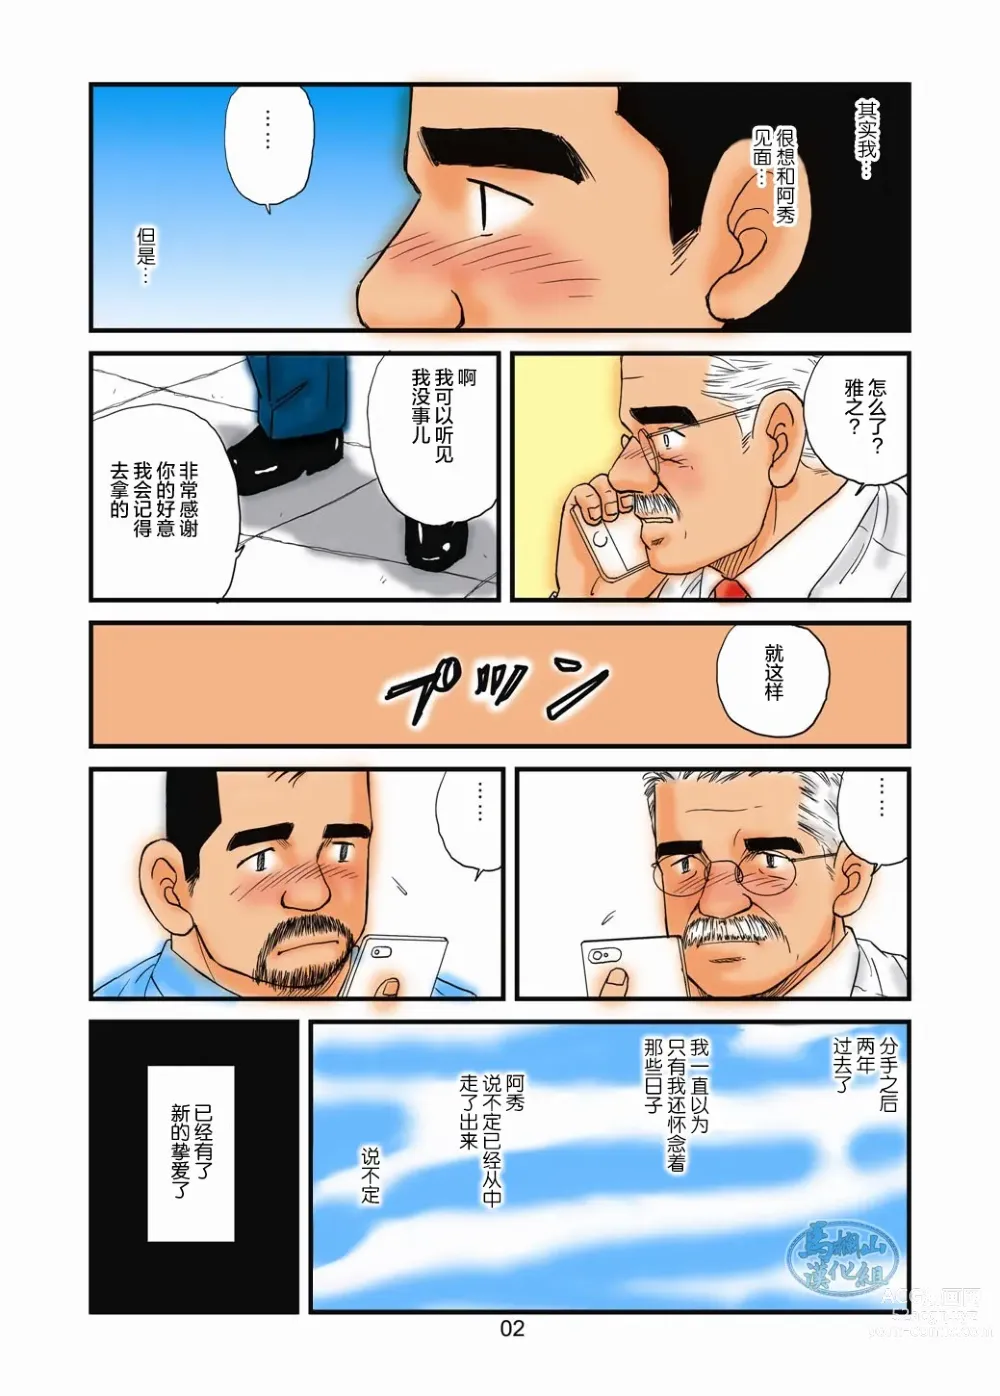 Page 24 of manga 「铁道员的浪漫」第一回 深夜的站长室